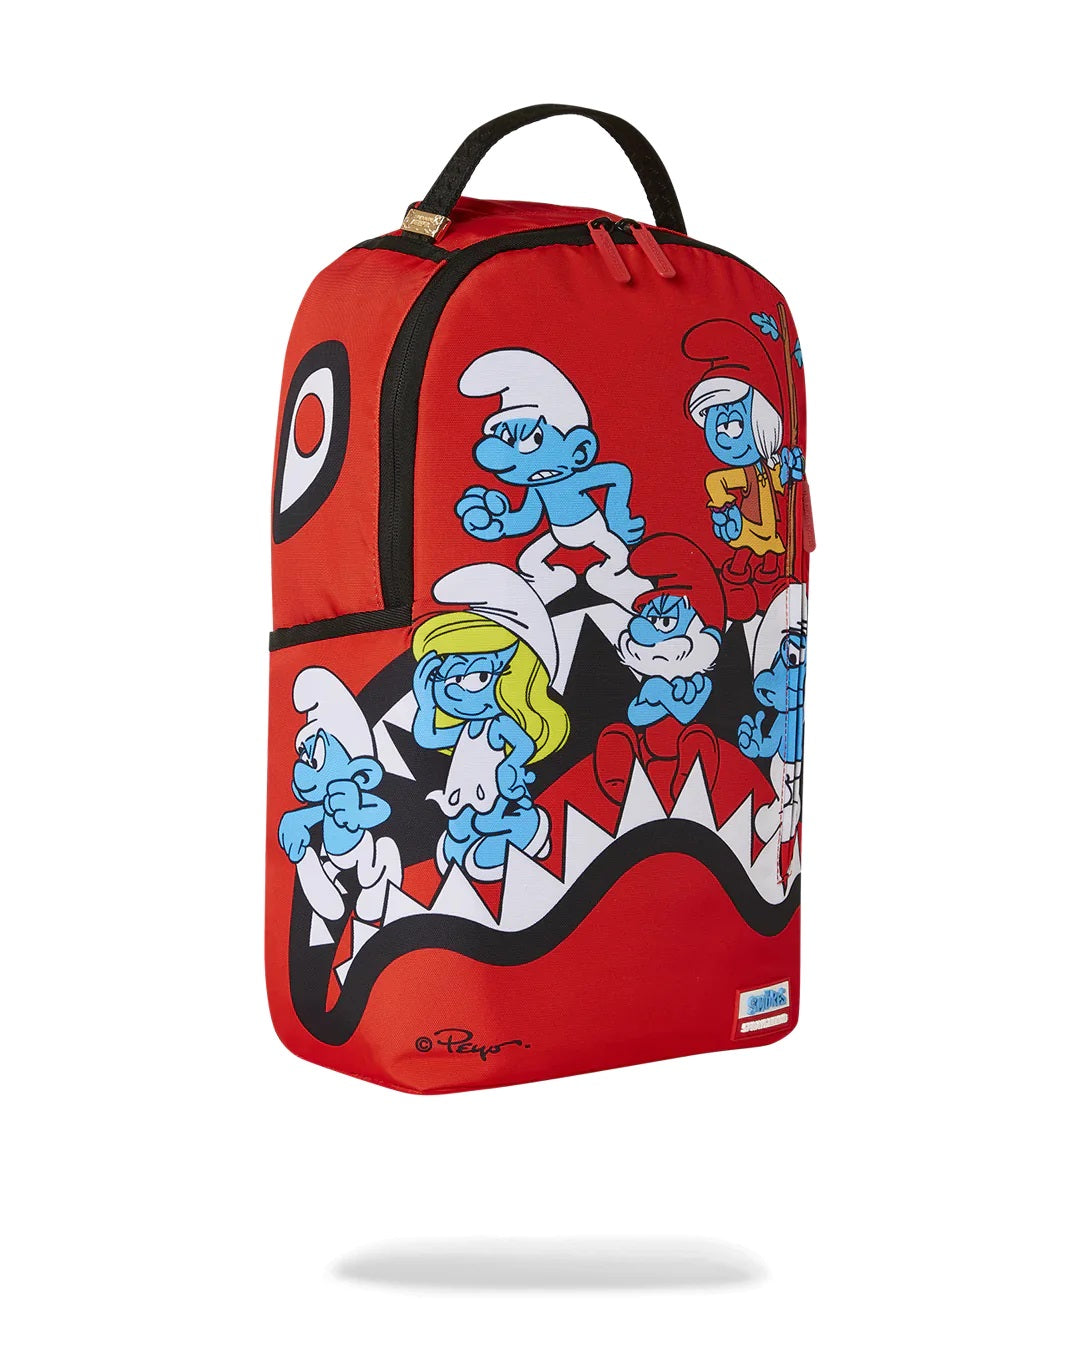 Sprayground kids Smurfs shark backpack